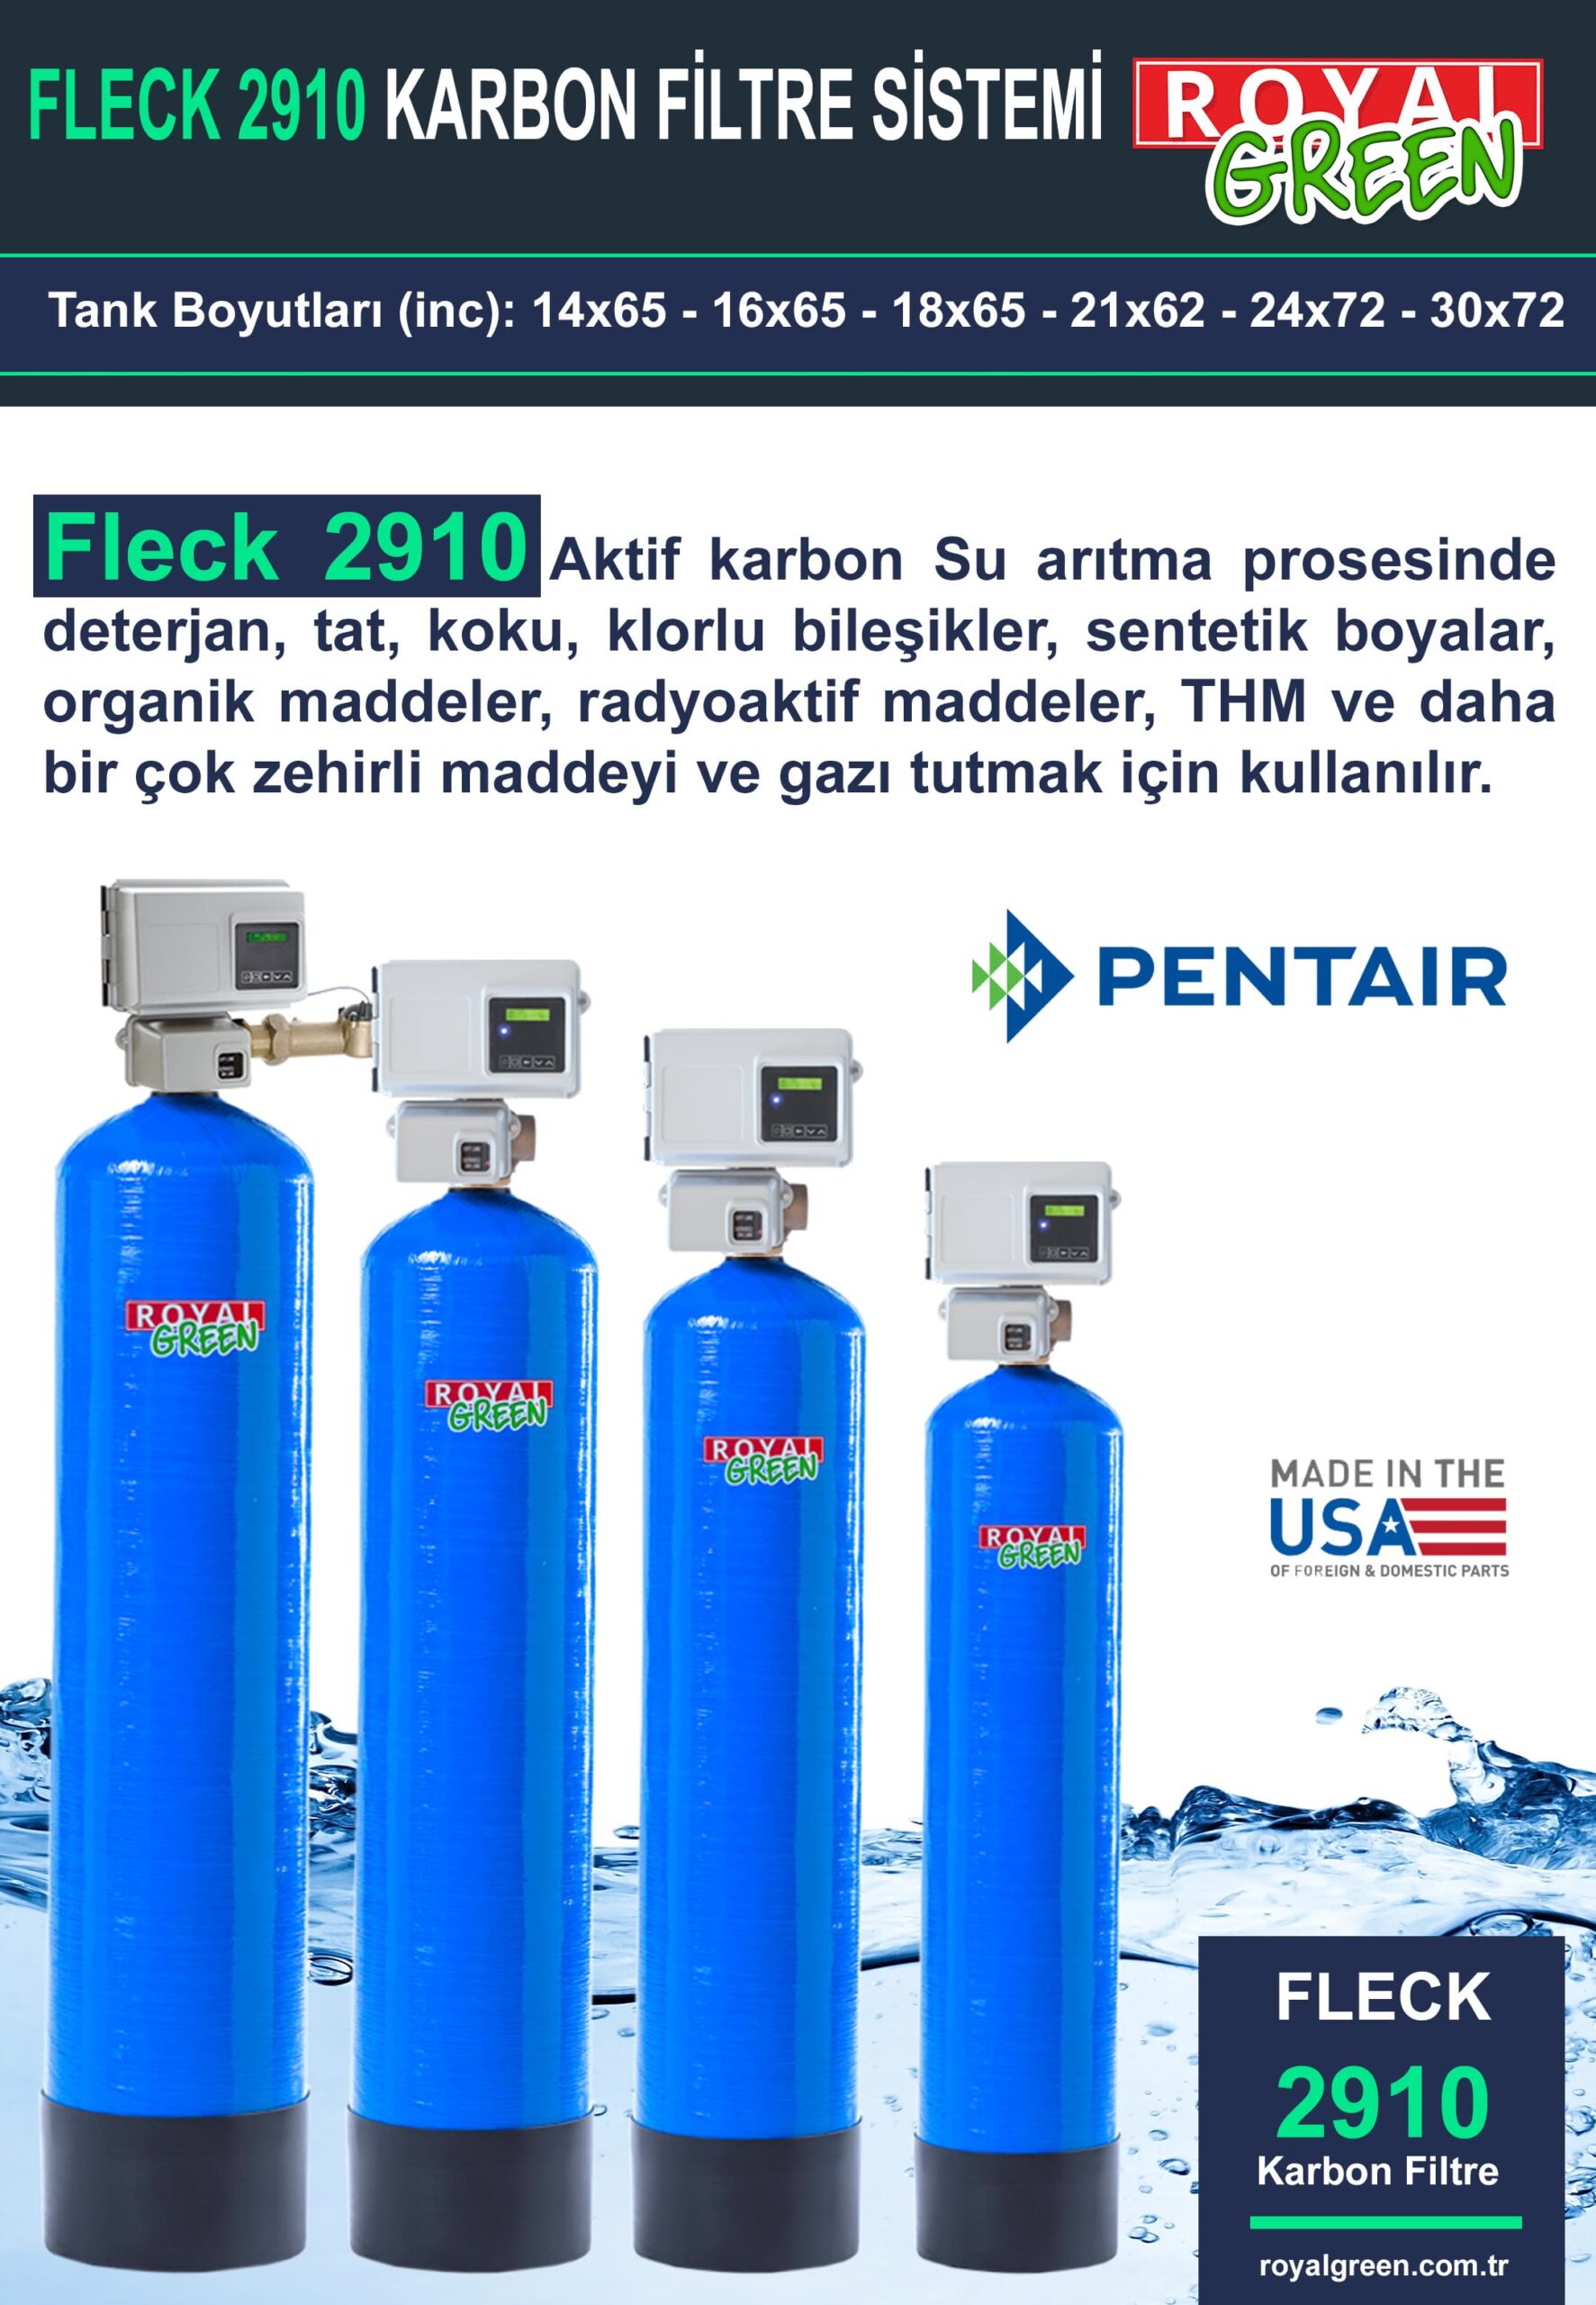 Pentair Fleck 2910 Valfli Karbon Filtre Sistemi Banner